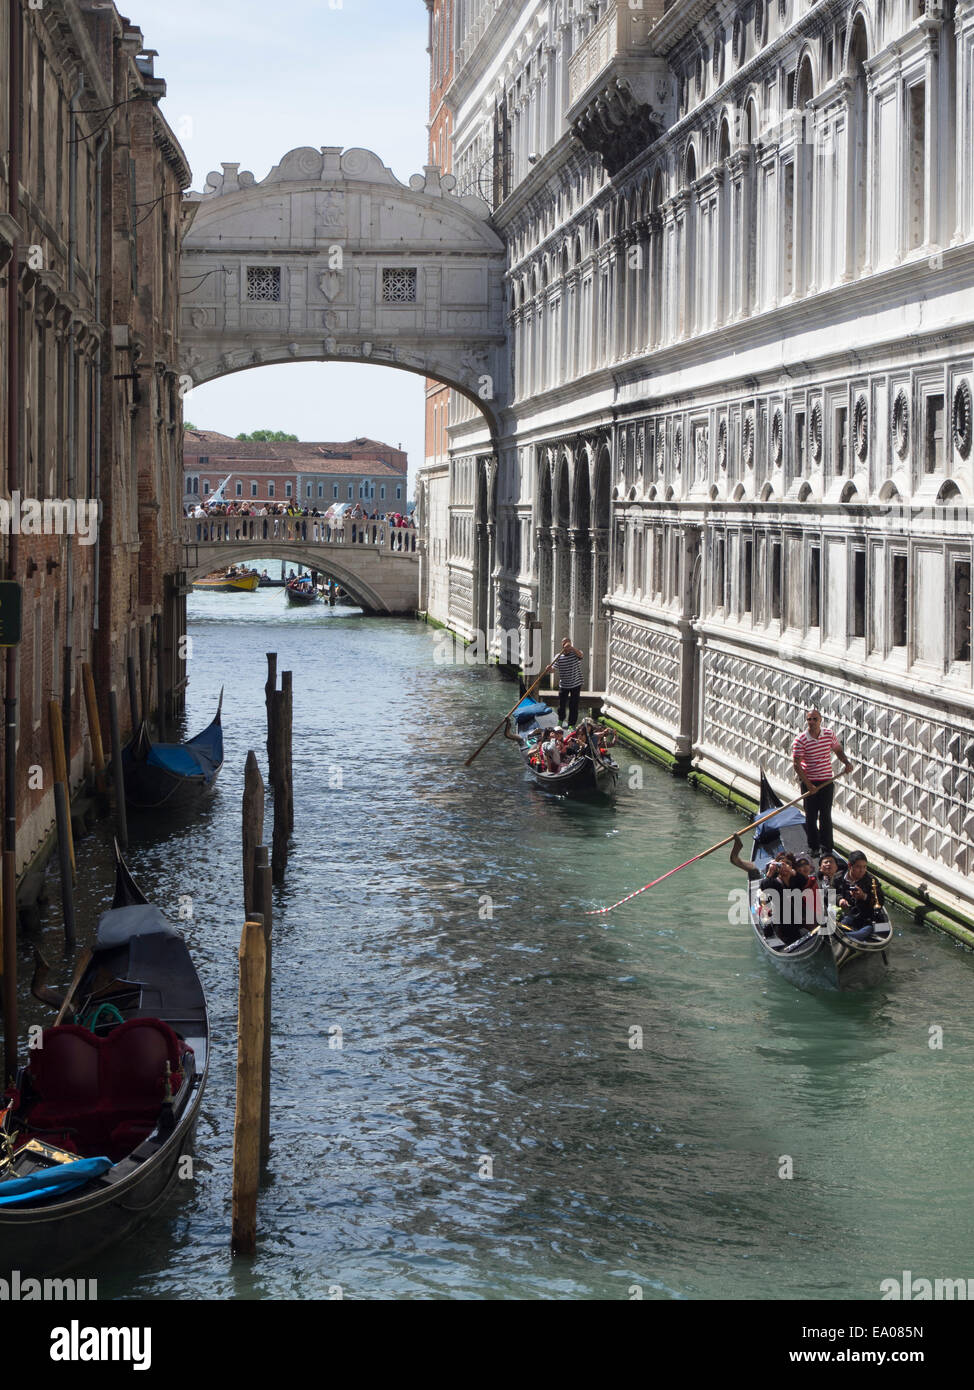 The Bridge of sighs, Venice. Stock Photo